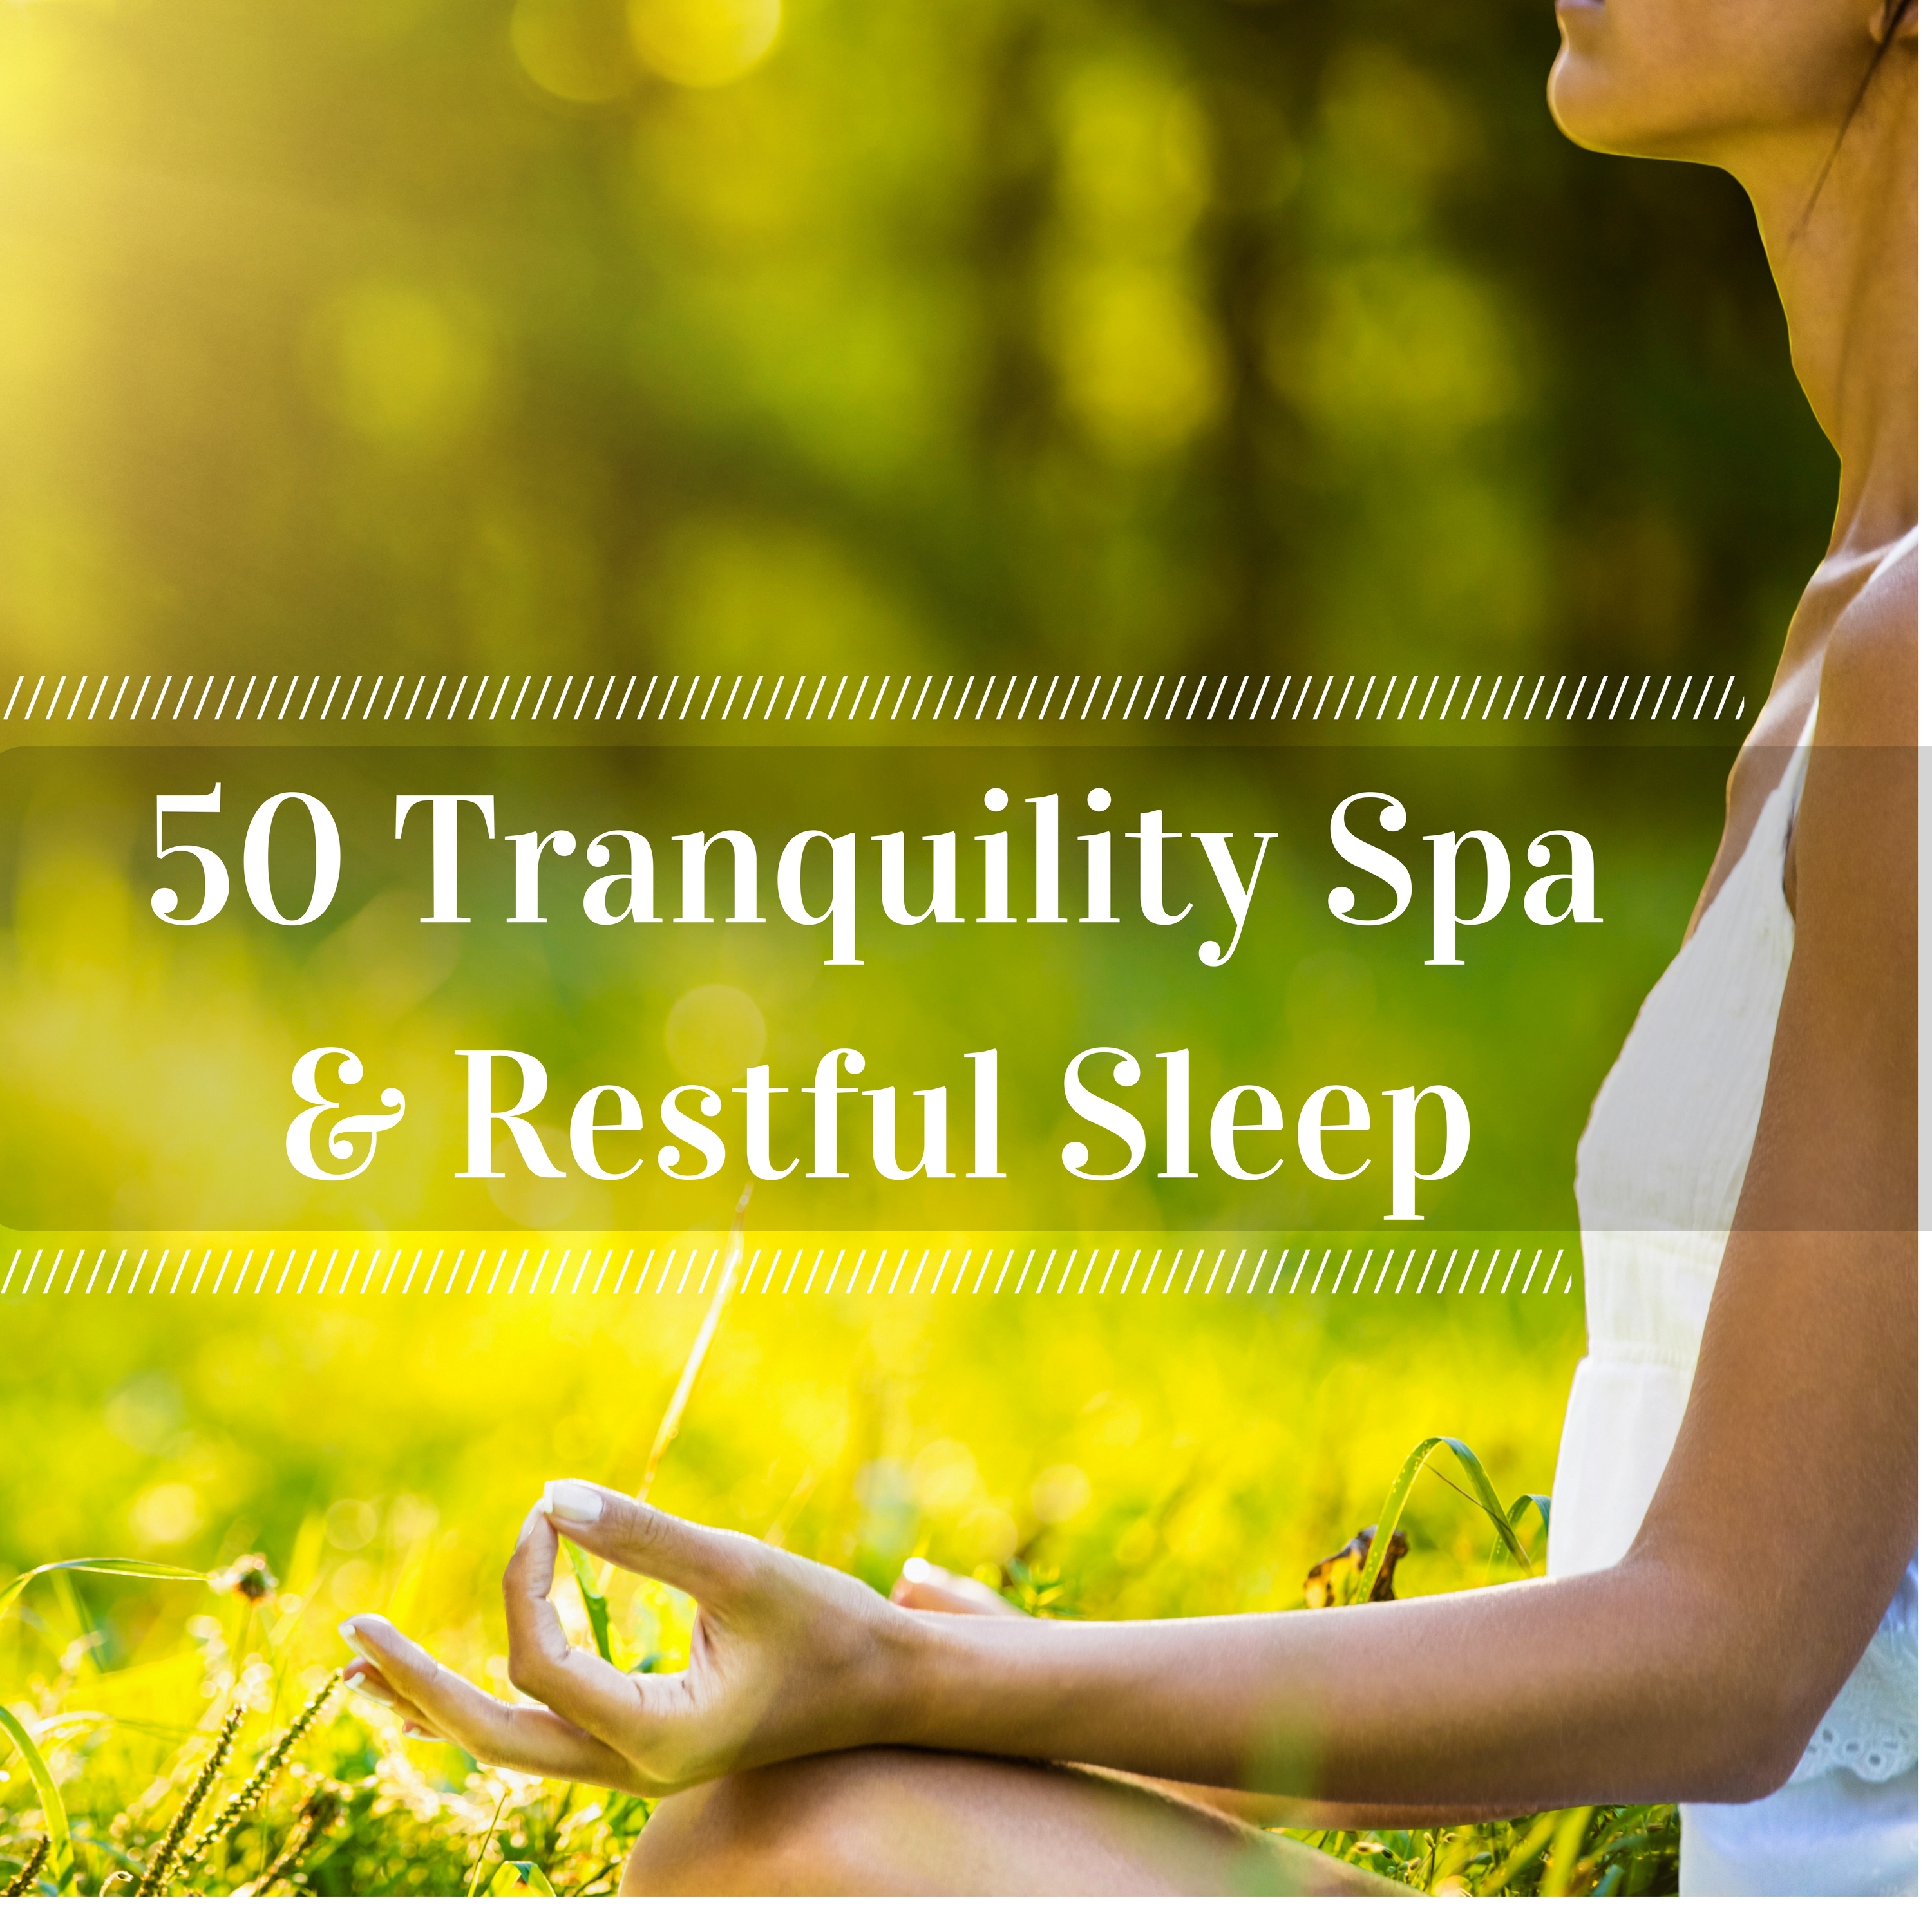 50 Tranquility Spa & Restful Sleep